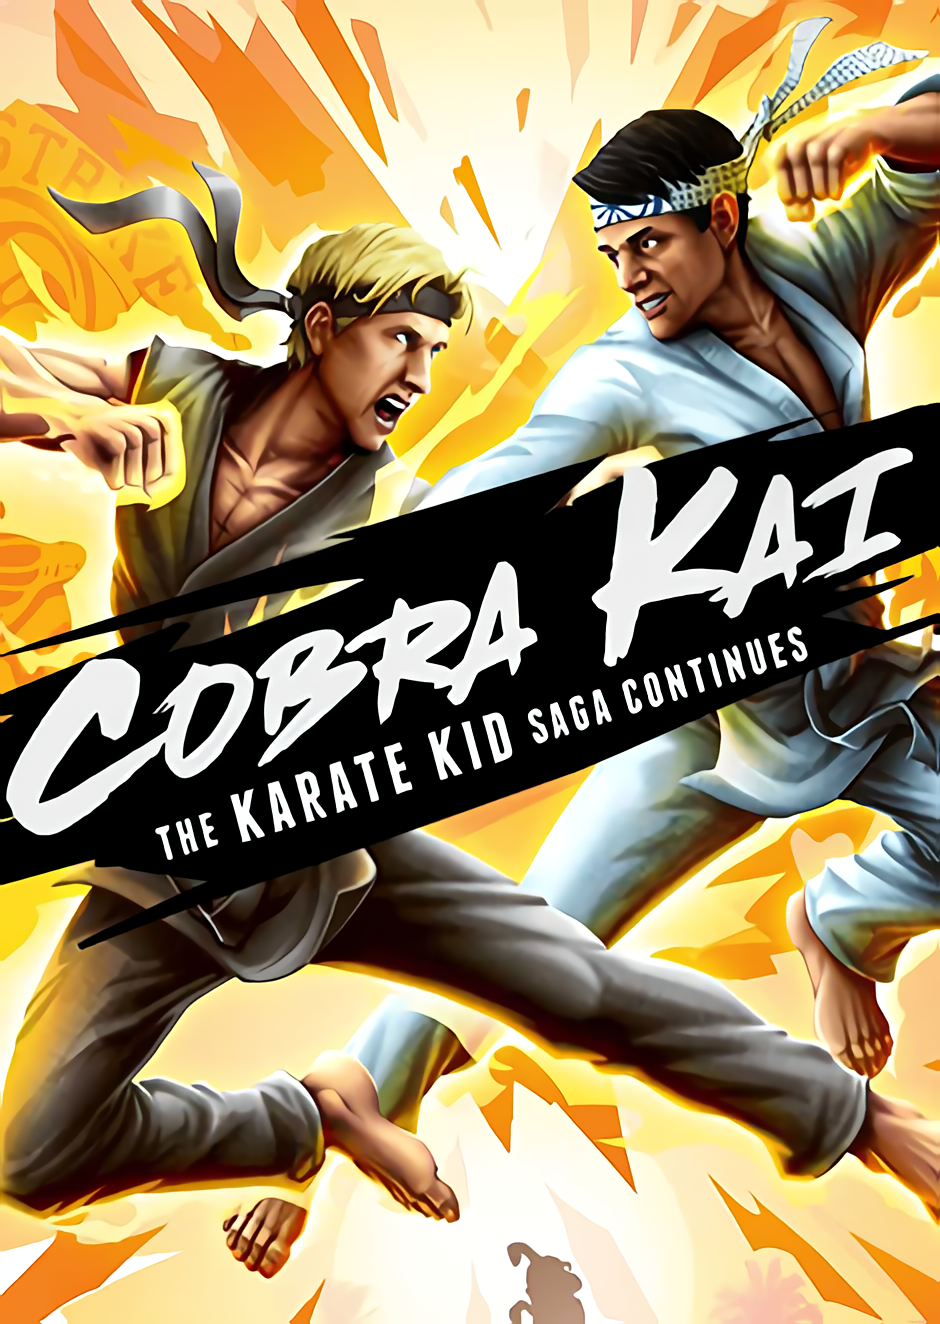 Cobra Kai: The Karate Kid Saga Continues [PC, Цифровая версия] (Цифровая версия) цена и фото